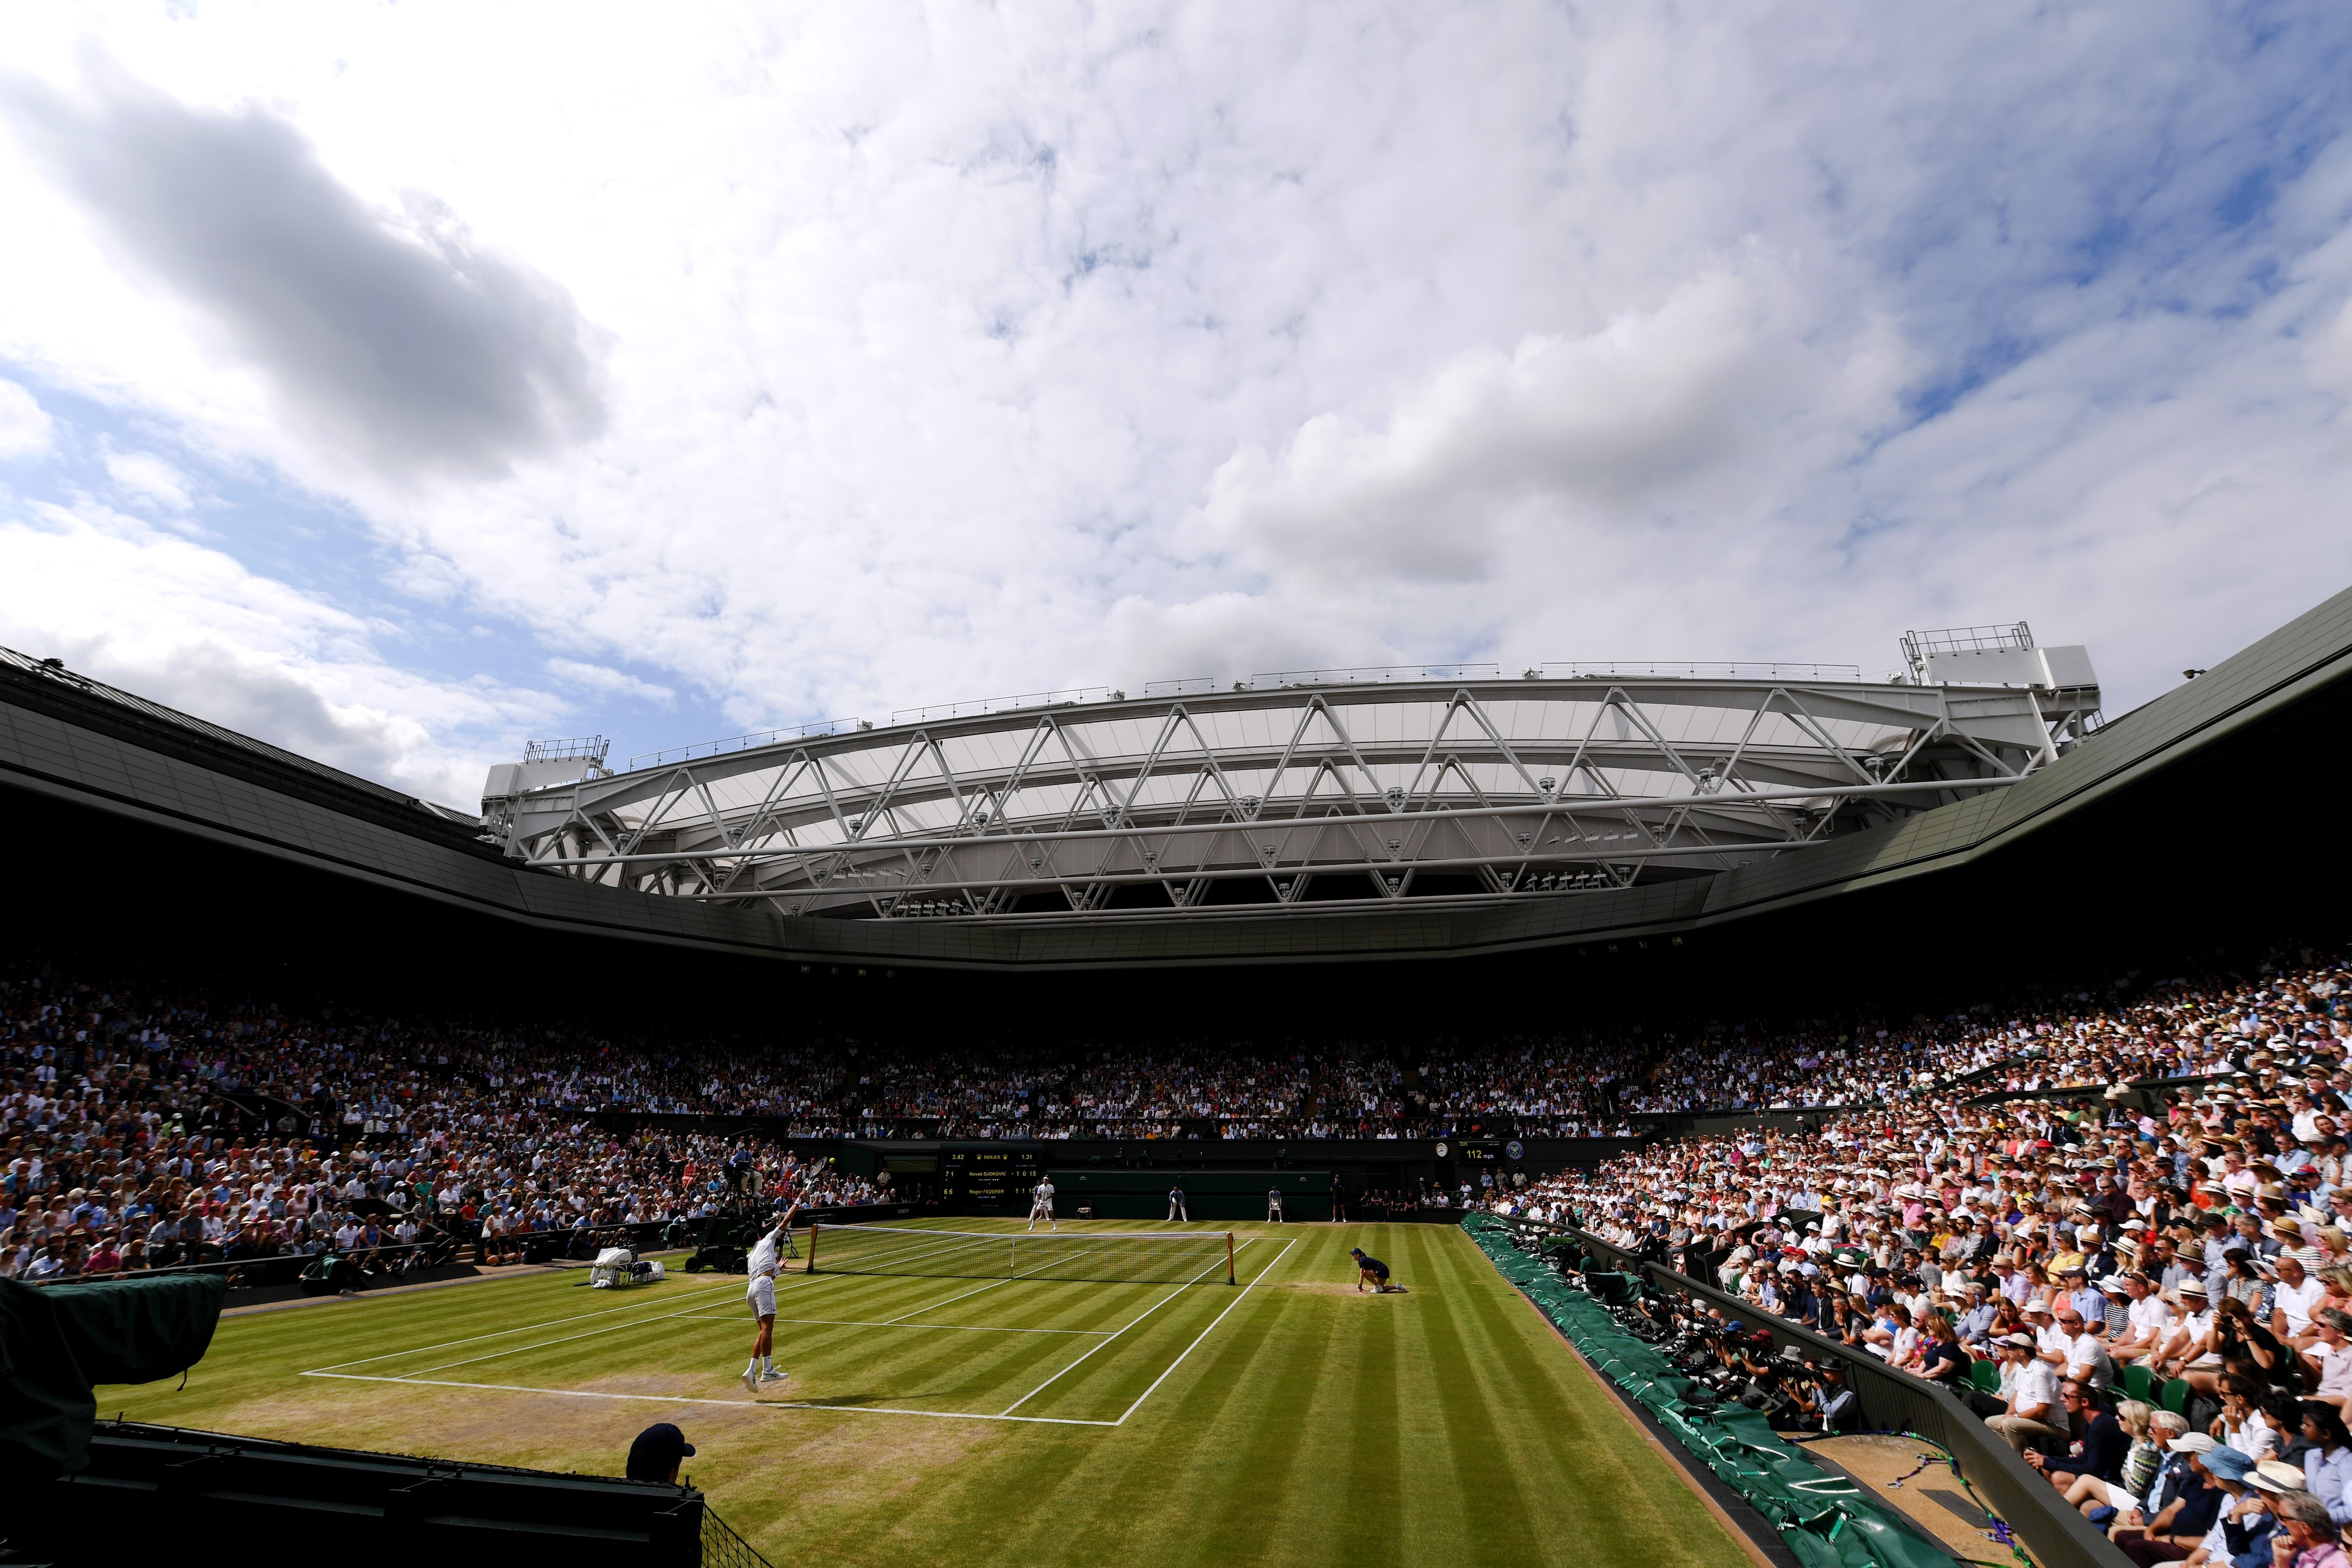 La pista central durante la final de Wimbledon 2019 que enfrentó a Roger Federer y Novak Djokovic.